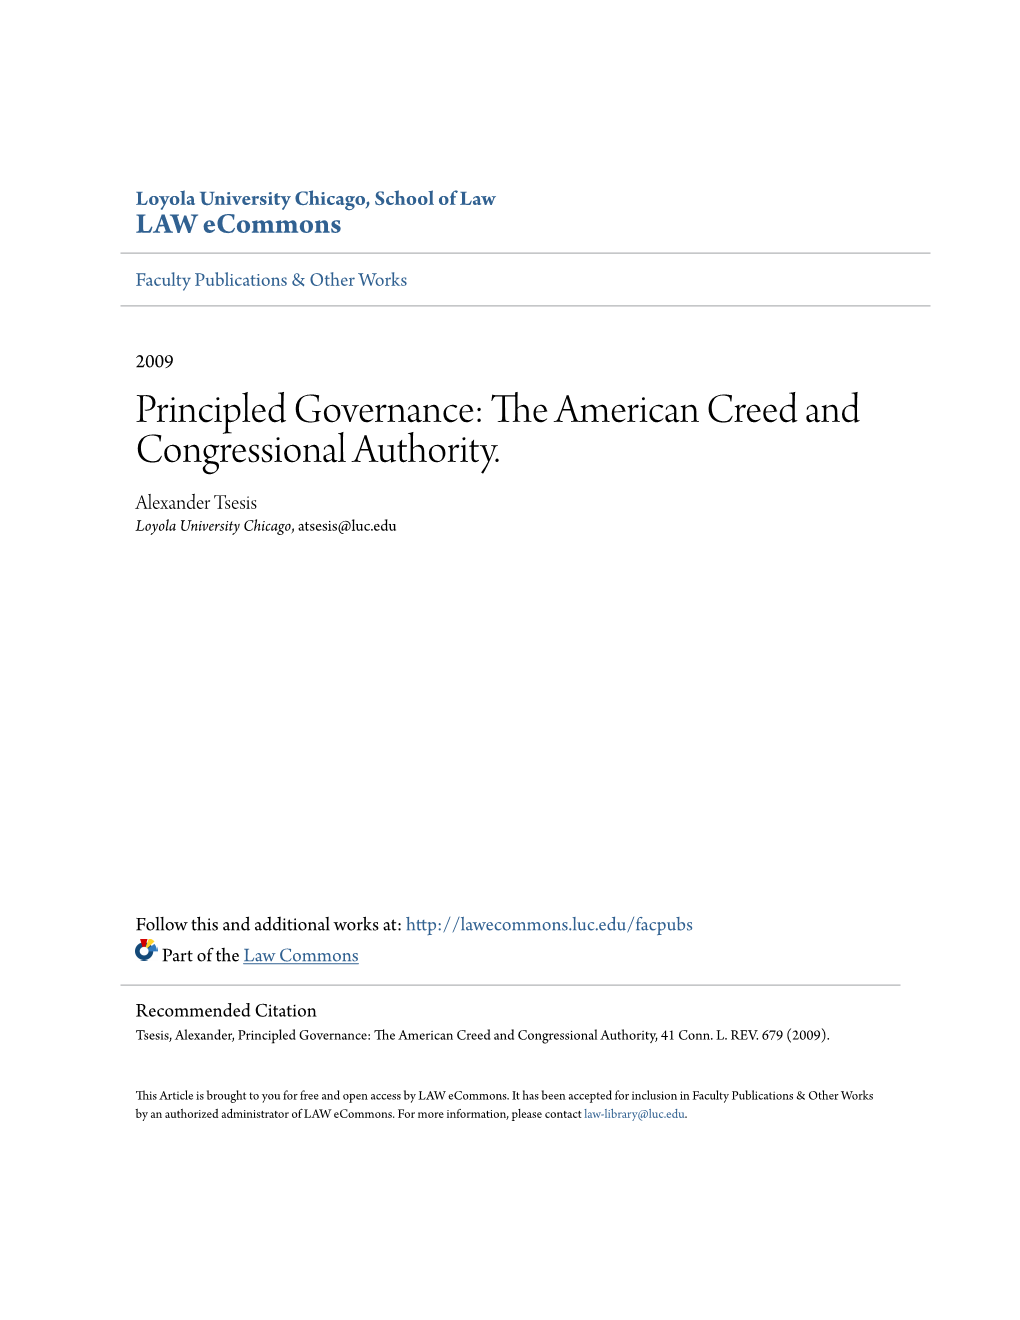 Principled Governance: the American Creed and Congressional Authority. Alexander Tsesis Loyola University Chicago, Atsesis@Luc.Edu